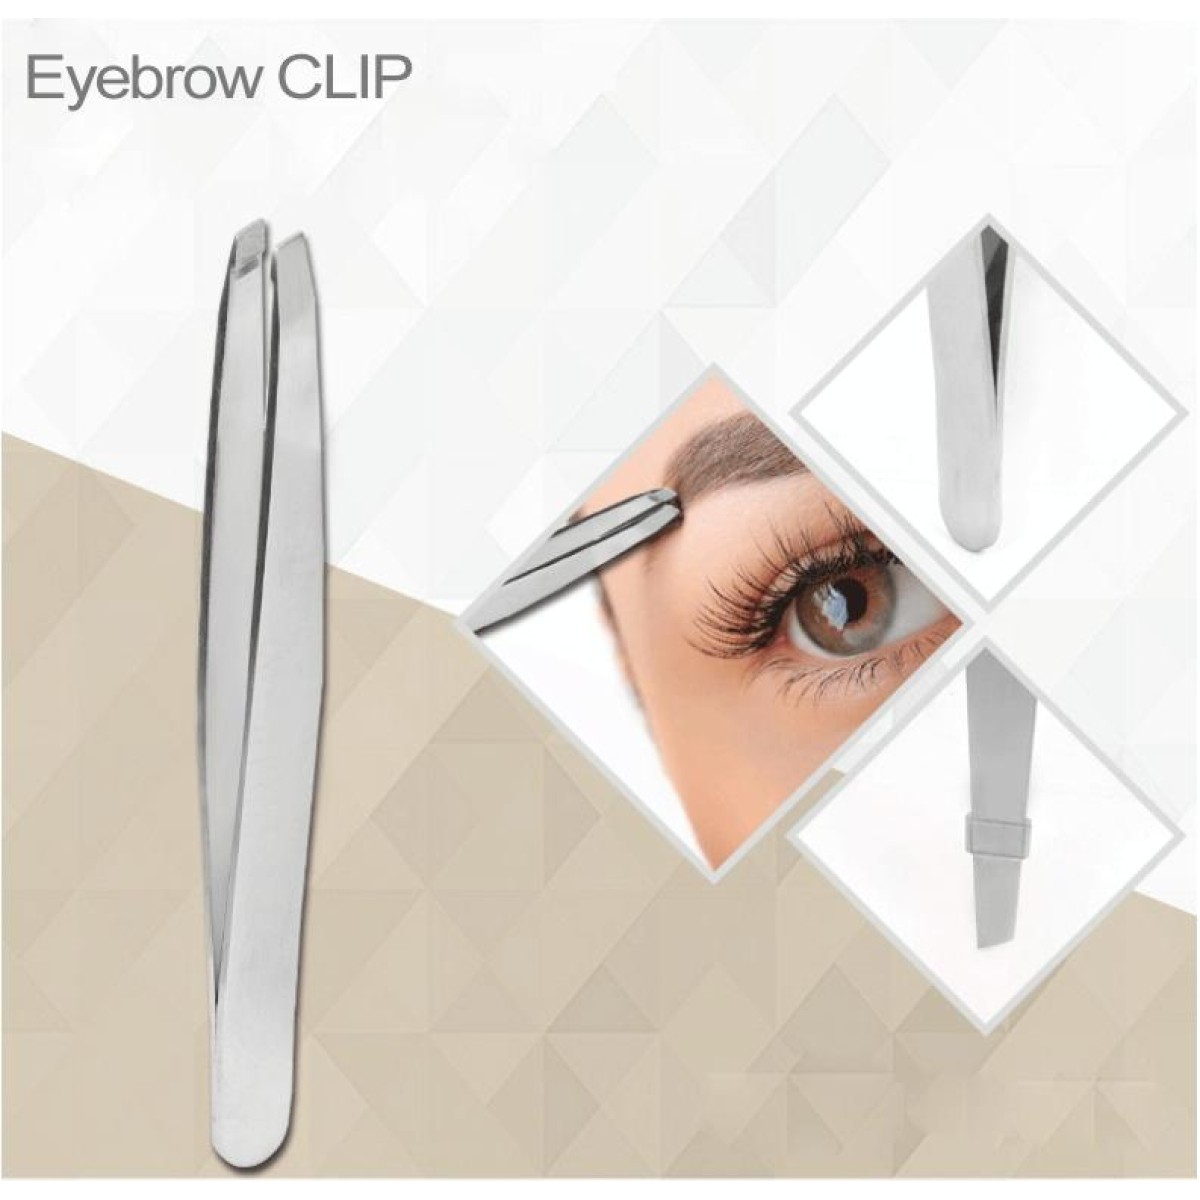 Portable Stainless Steel Beauty Makeup Tools (Eyebrow Comb + Eyebrow Scissors + Eyebrow Knife + Eyebrow Clip + Eyebrow Brush) Kit